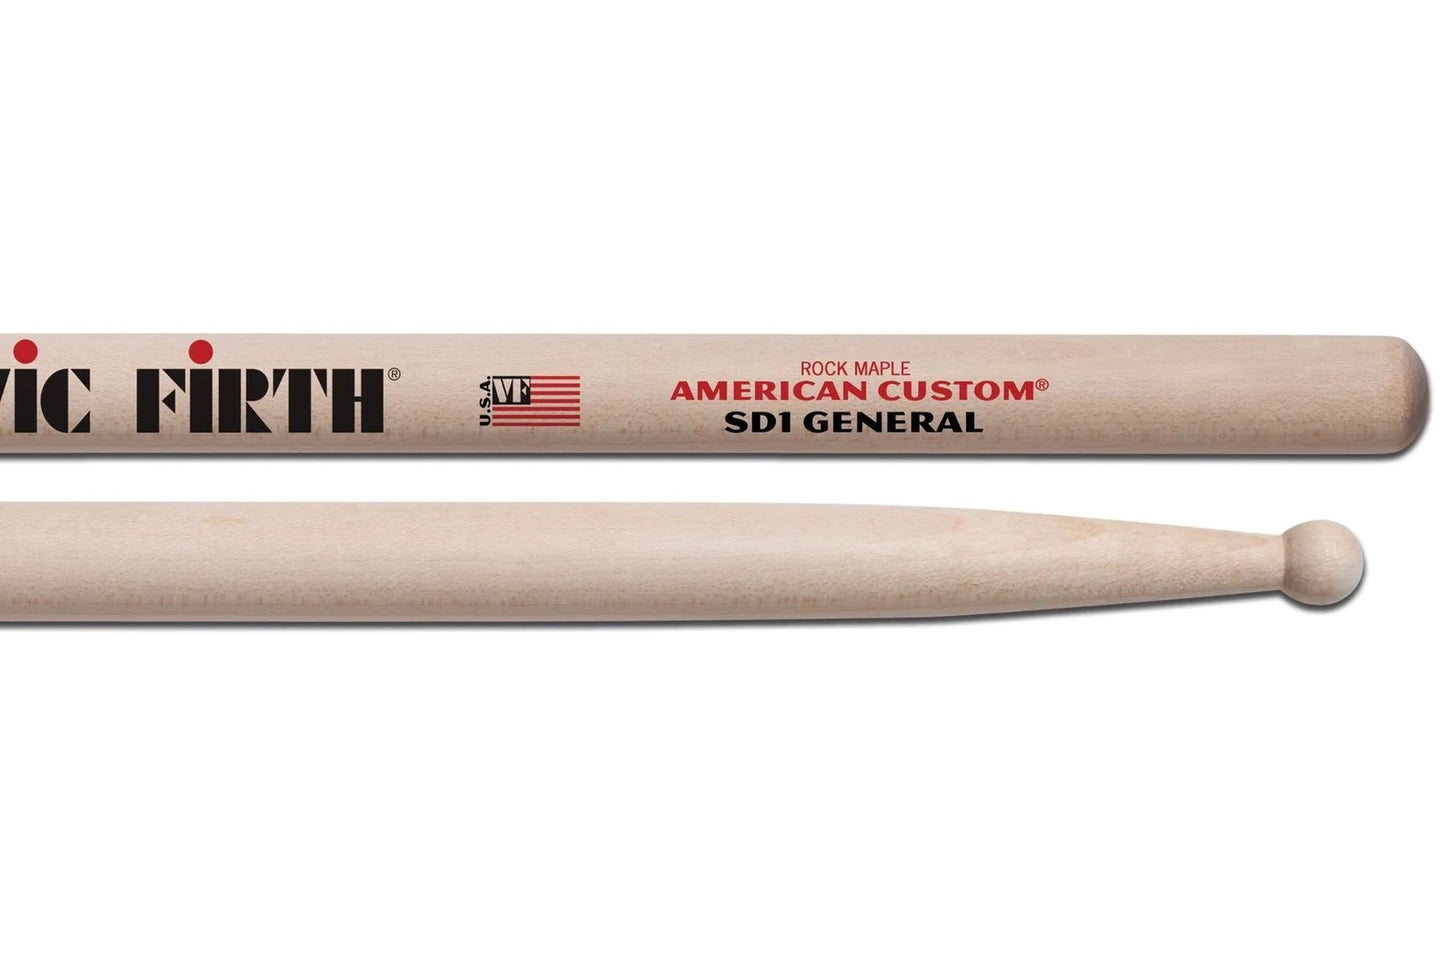 Vic Firth American Custom SD1 Drum Sticks